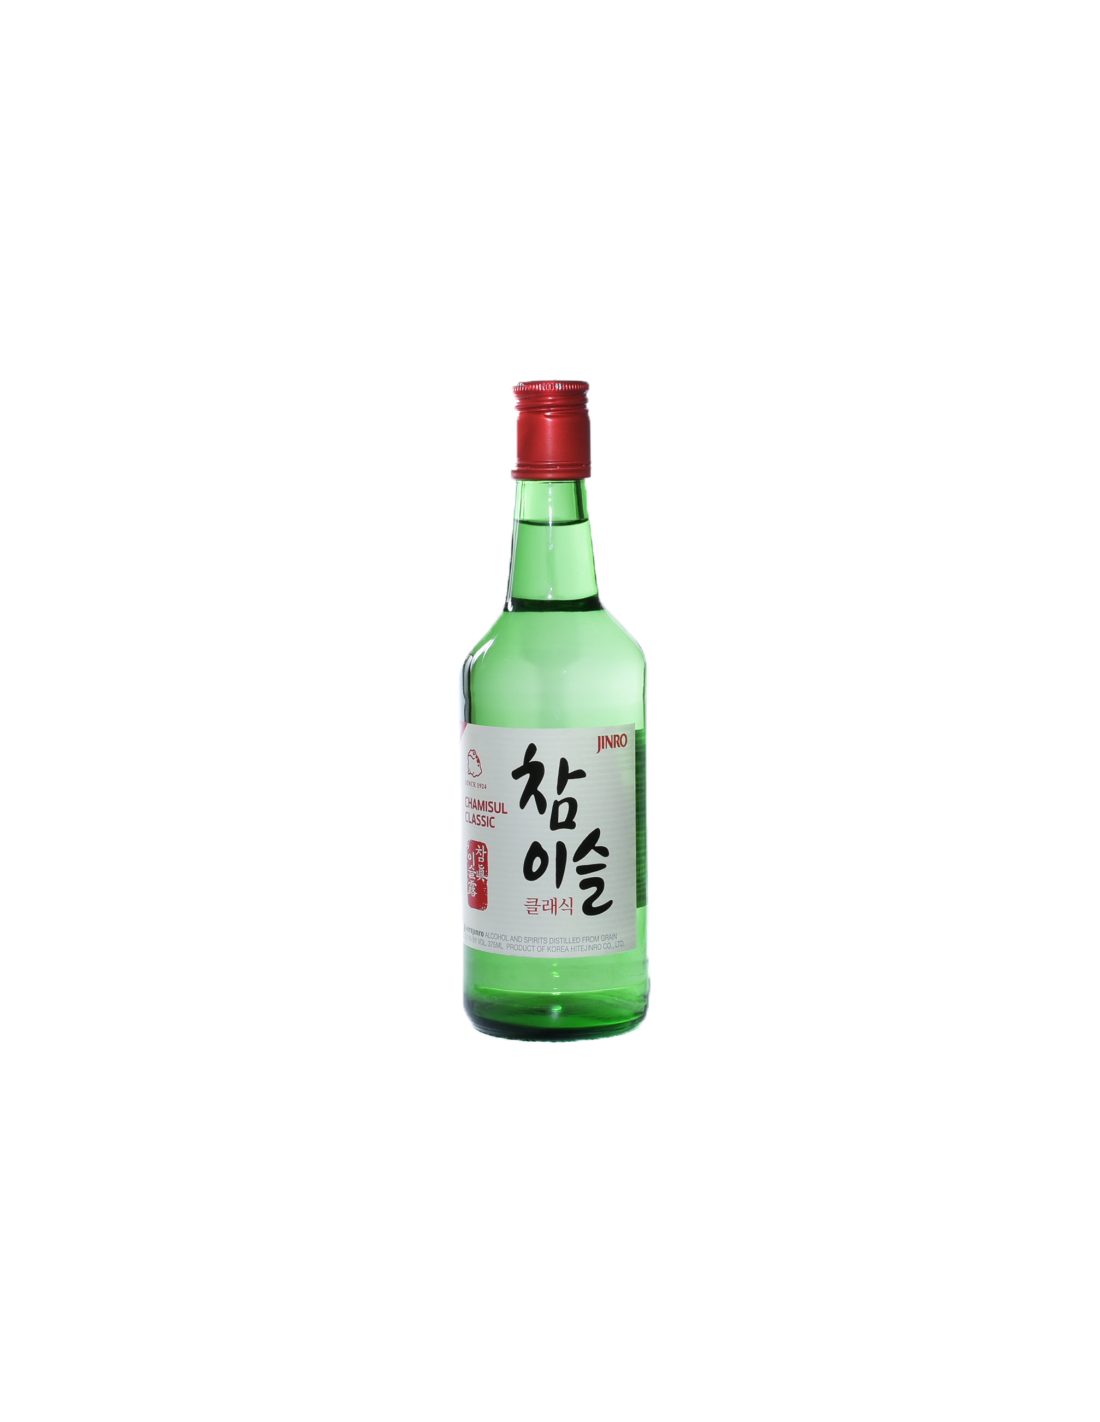 Bautura traditionala Jinro Soju Chamisul Original, 24% alc., 0.36L, Coreea